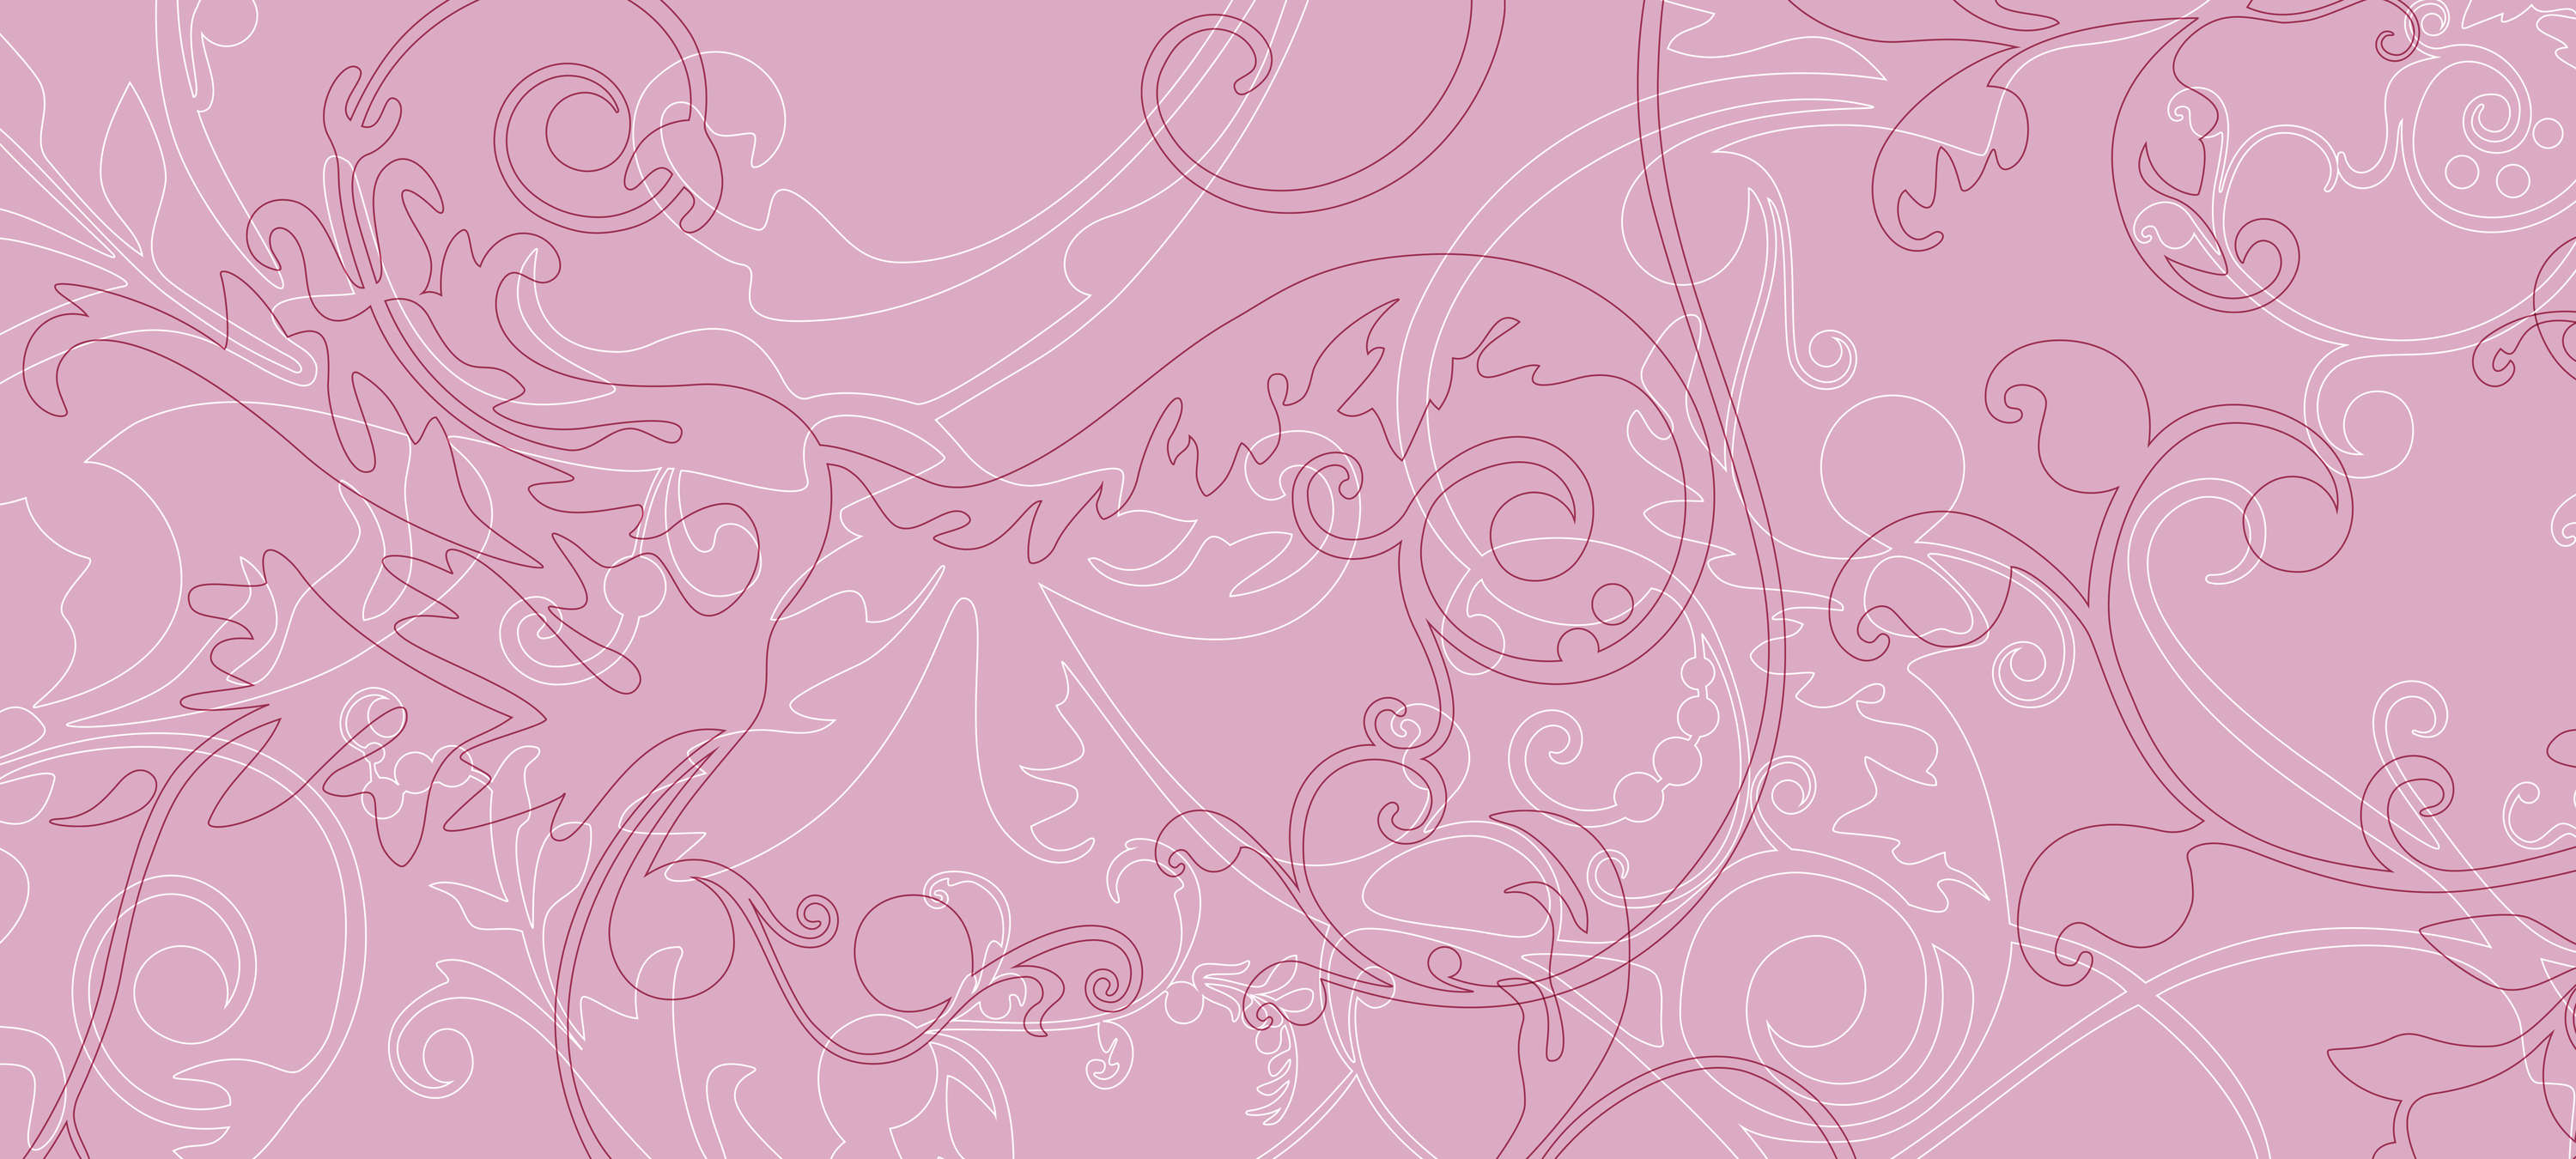             Ornamenti murali rosa, minimalisti ed eleganti - Rosa, bianco, viola
        